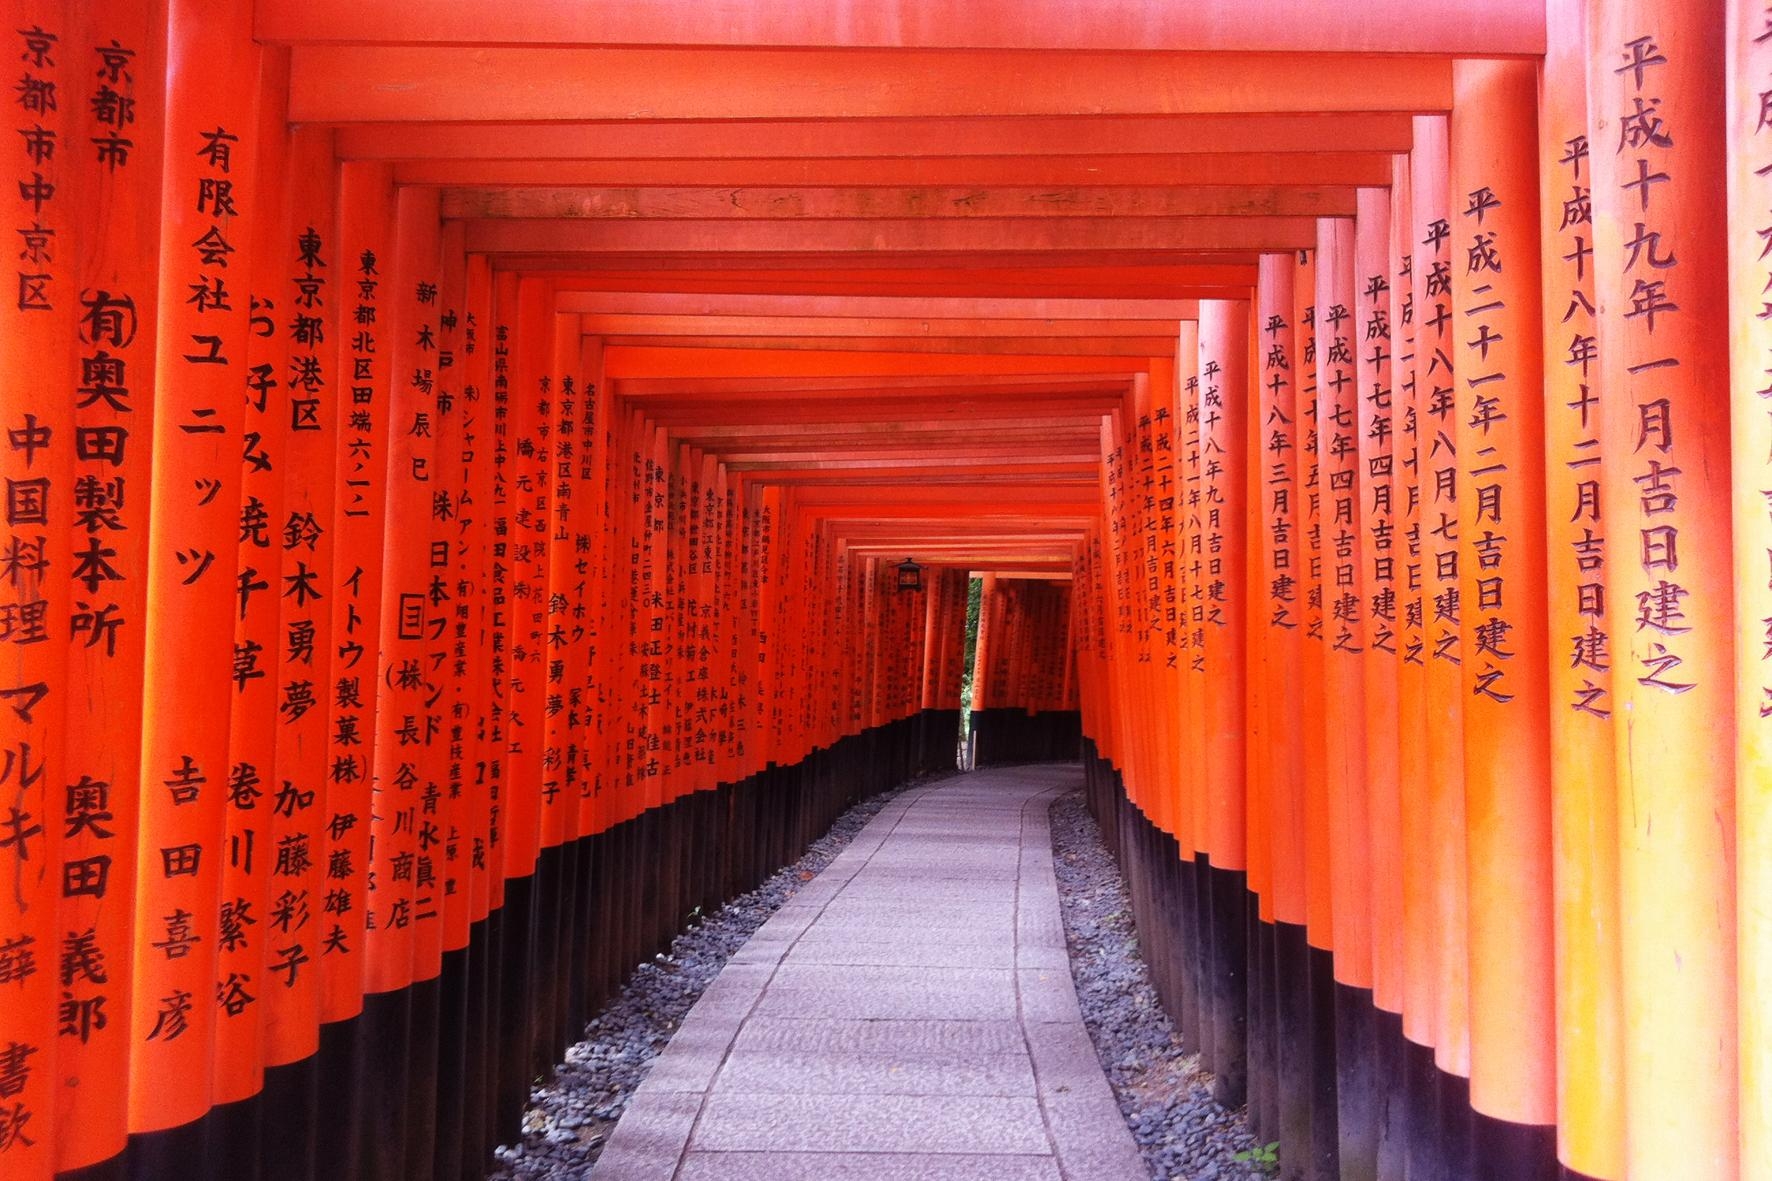 #japan #kyoto Fushimi Inari #breathtaking #magischeorte 🎎